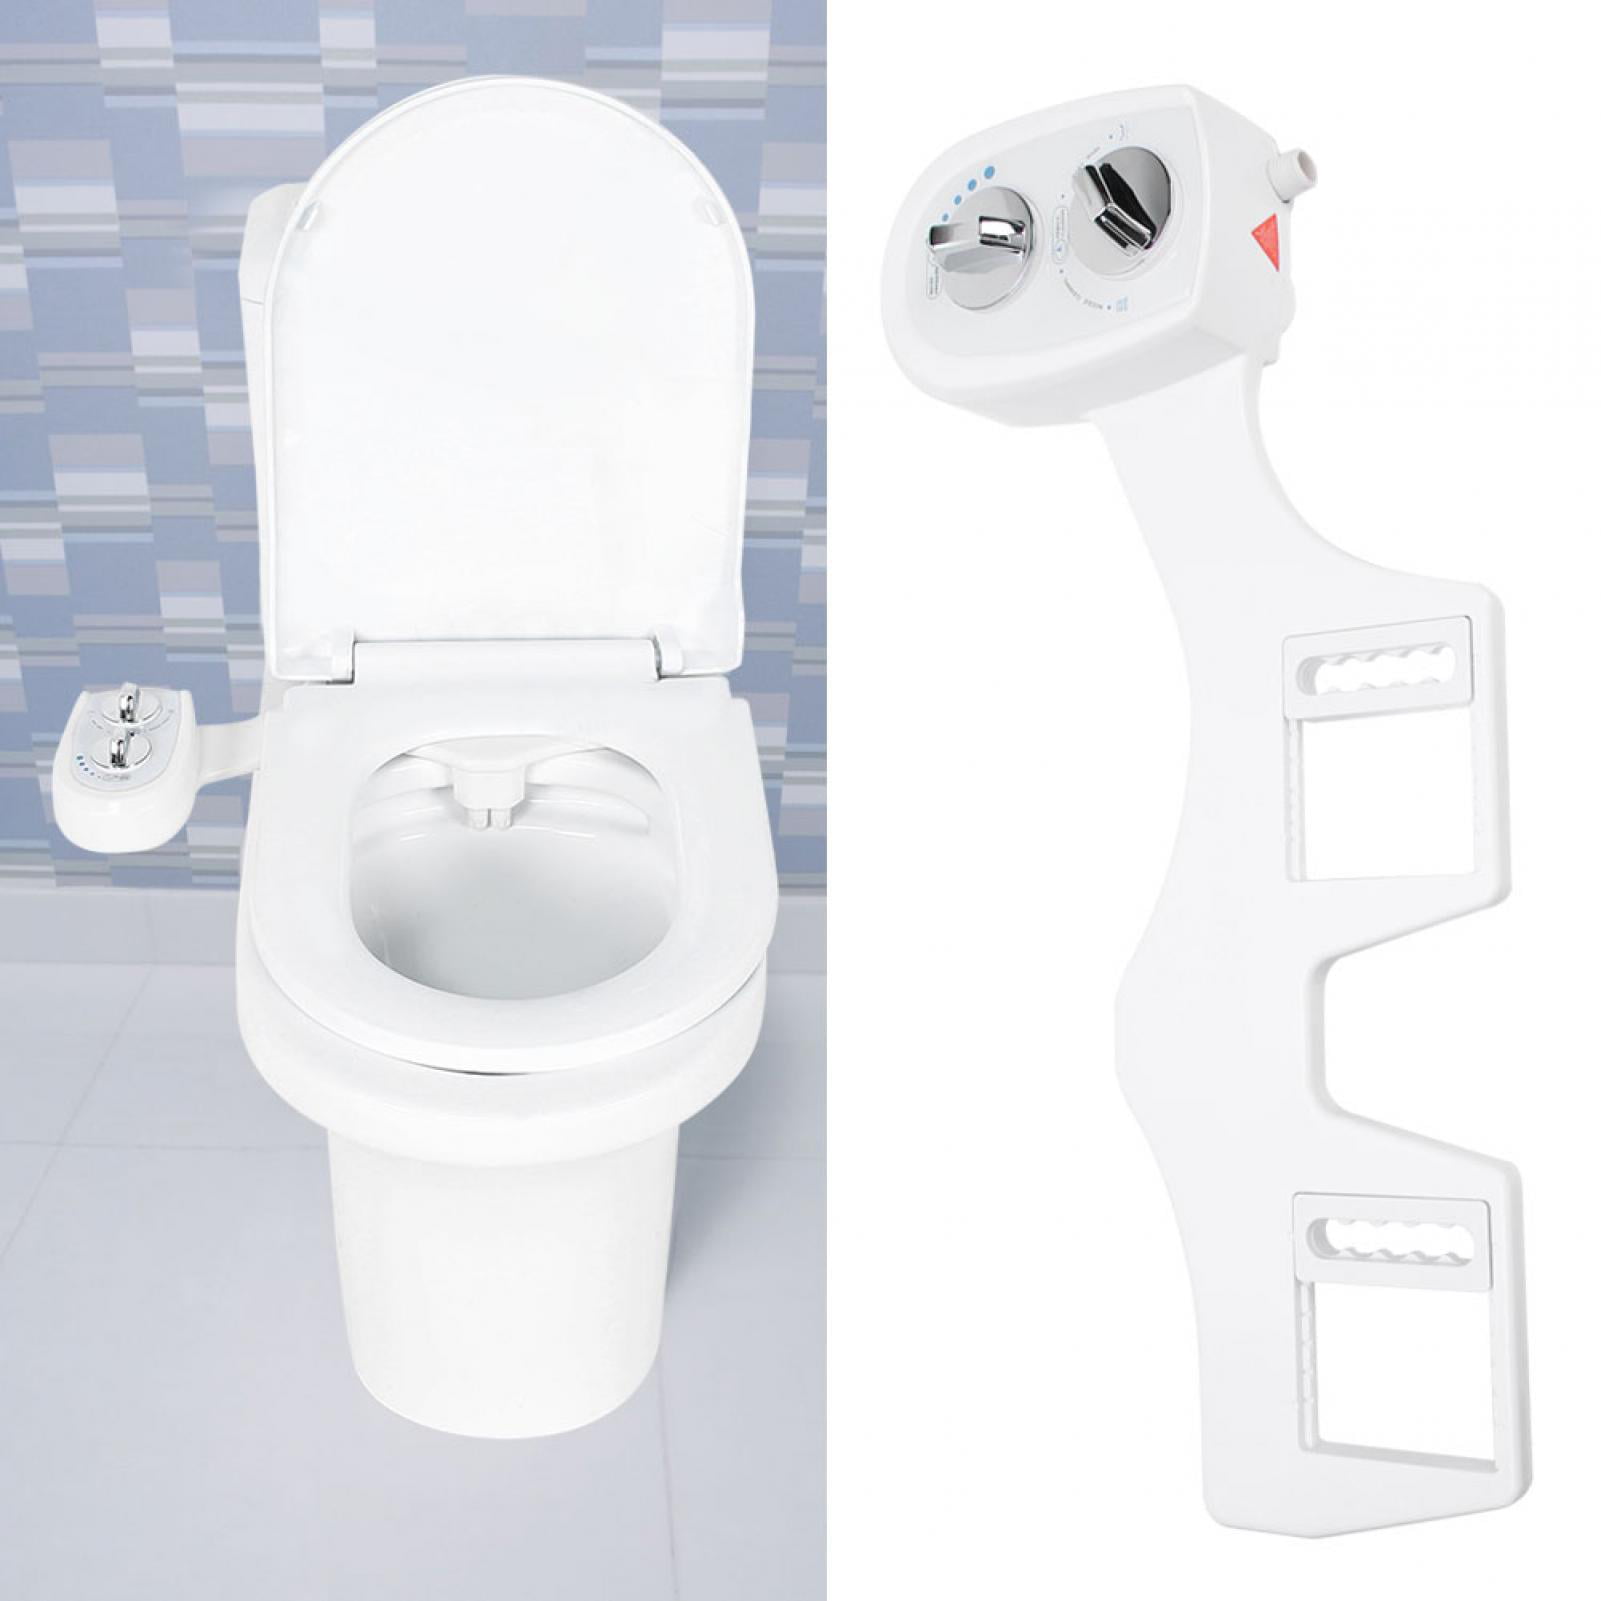 RV Bidet Sprayer For Toilet Seat Attachment Bedet Water Spray Non-Electric Tushy 